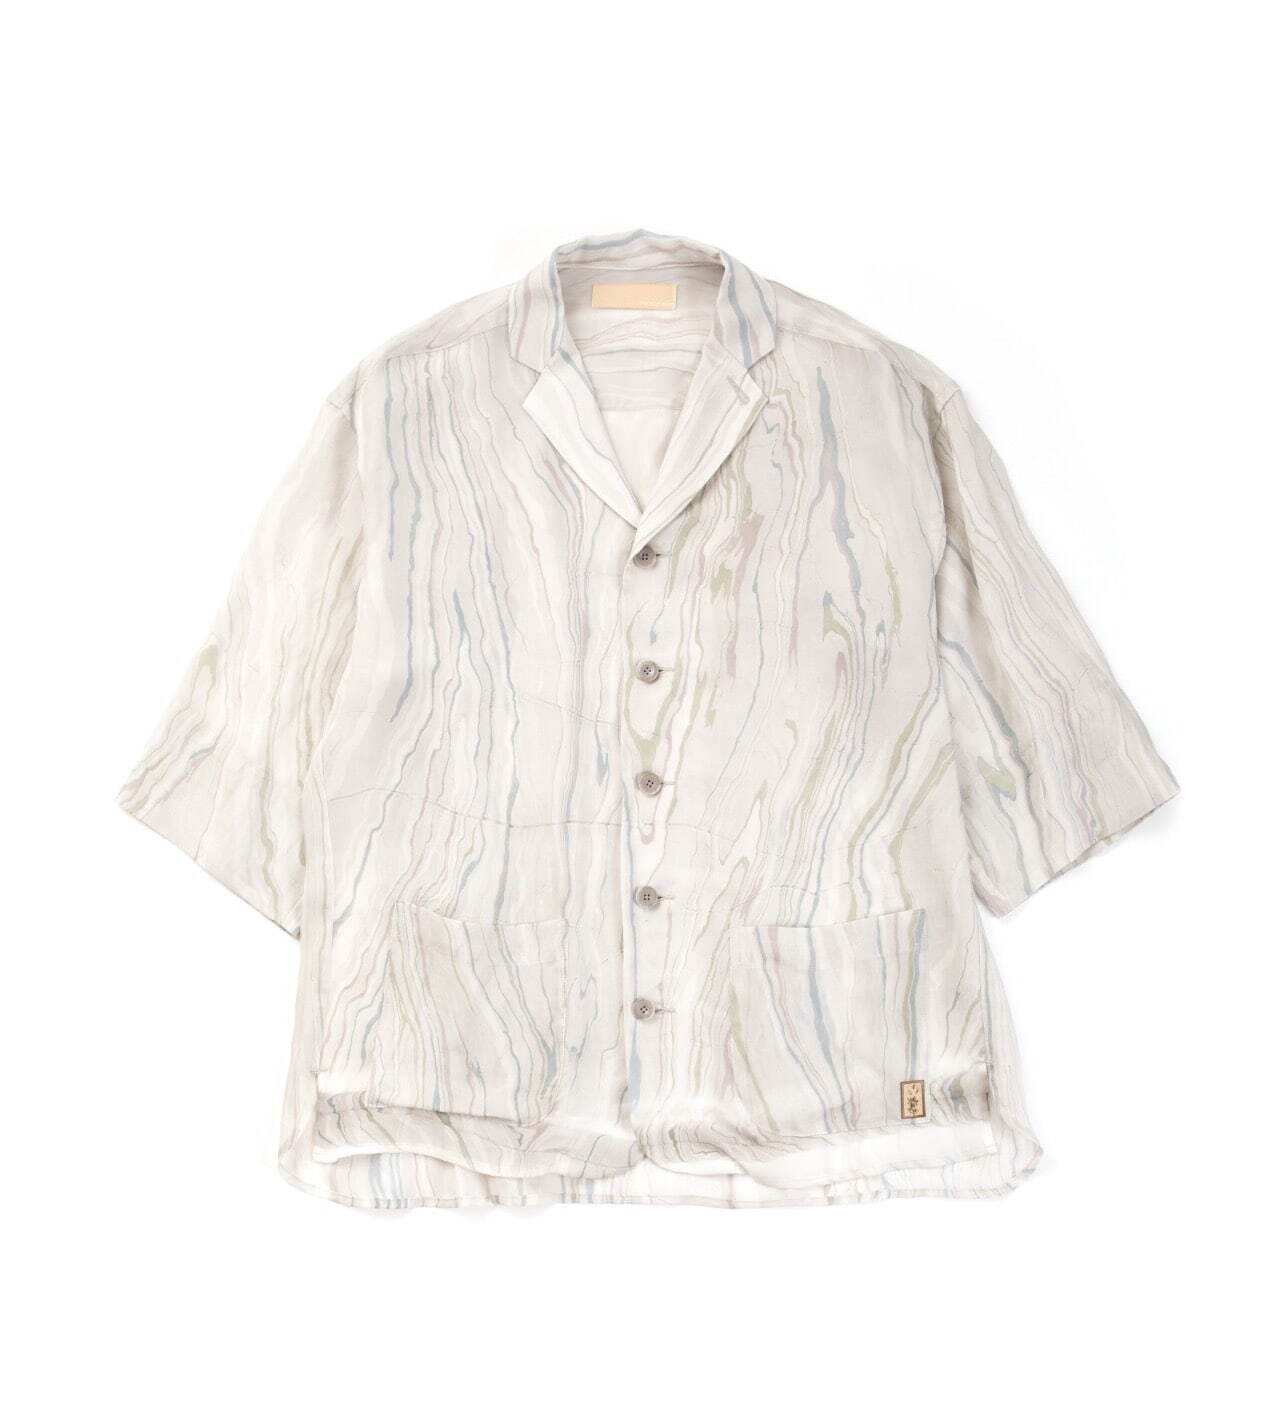 suminagashi marbling shirts 42,900円(税込)